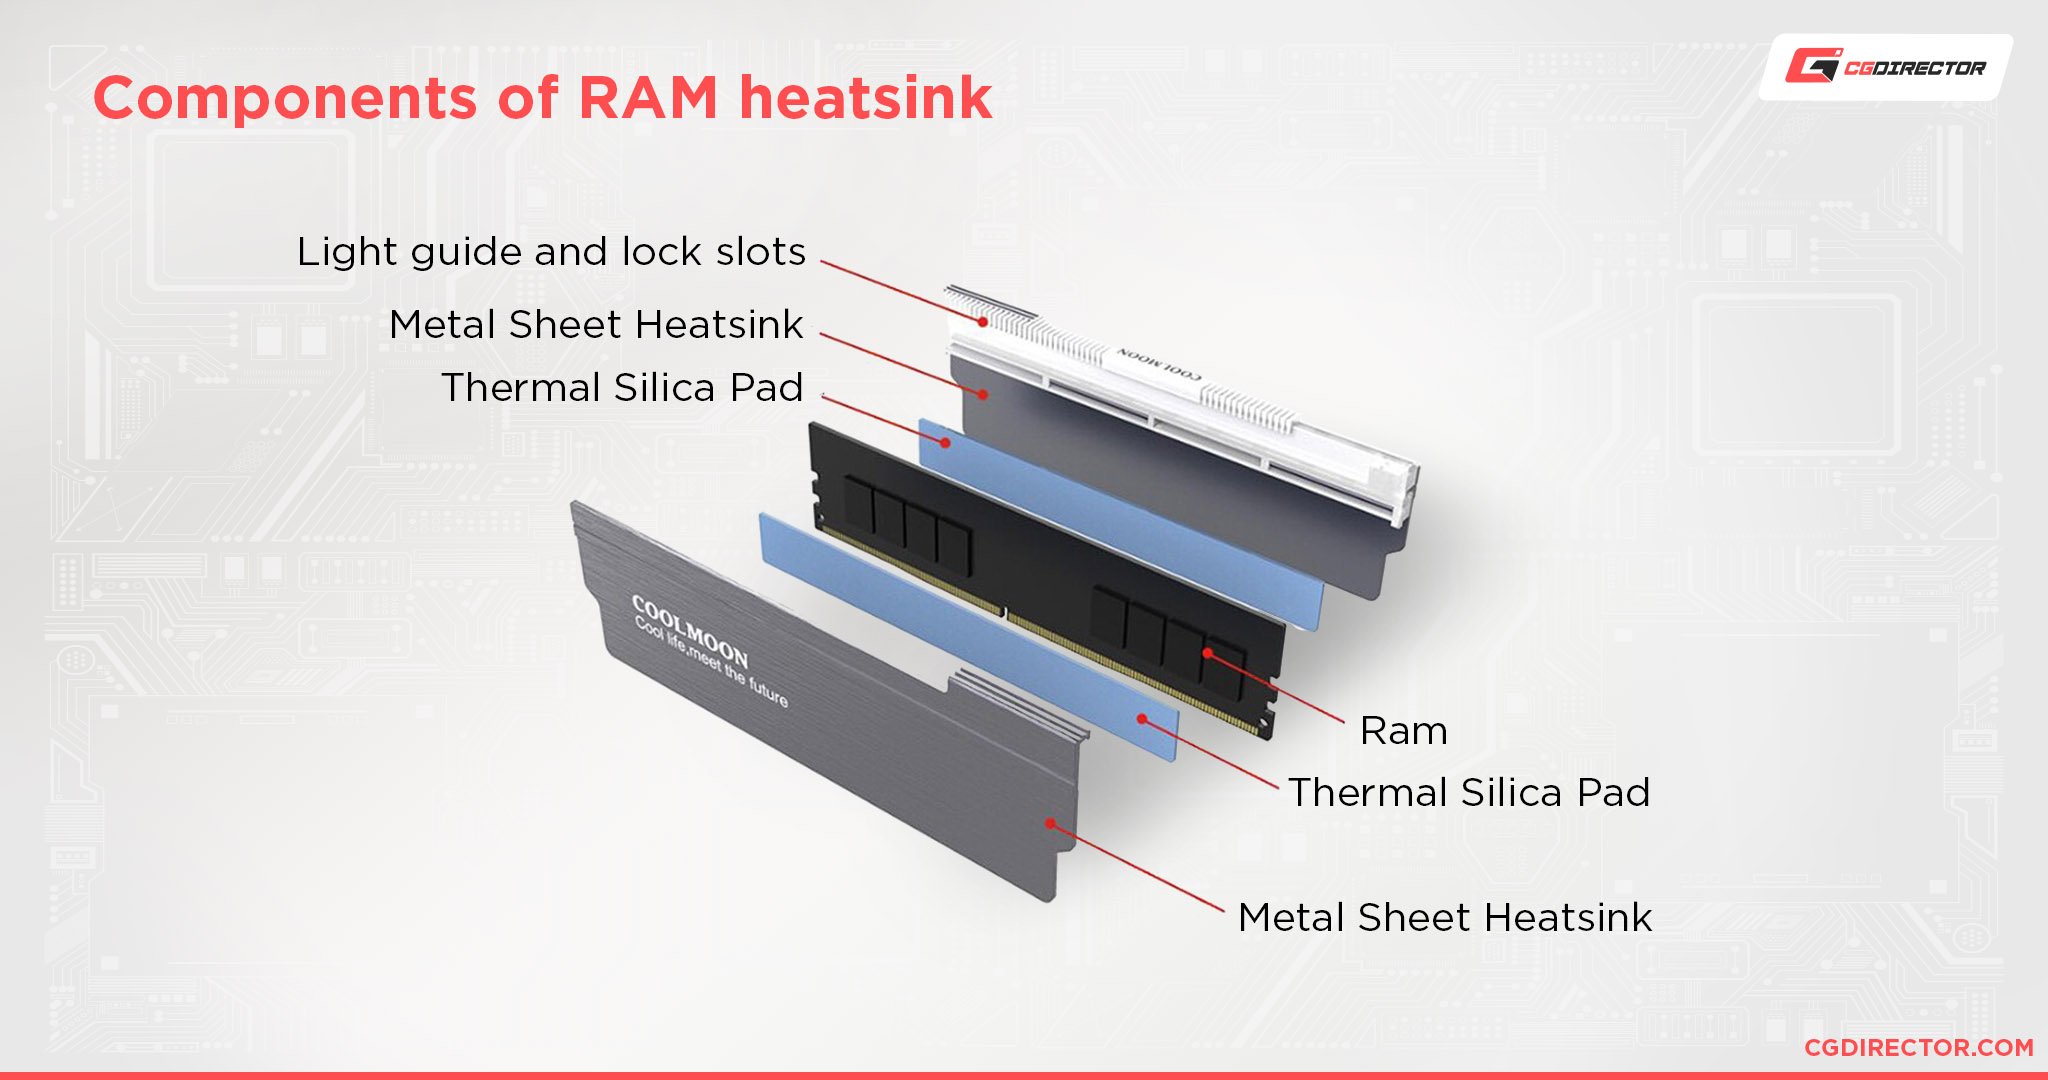 Components of RAM heatsink